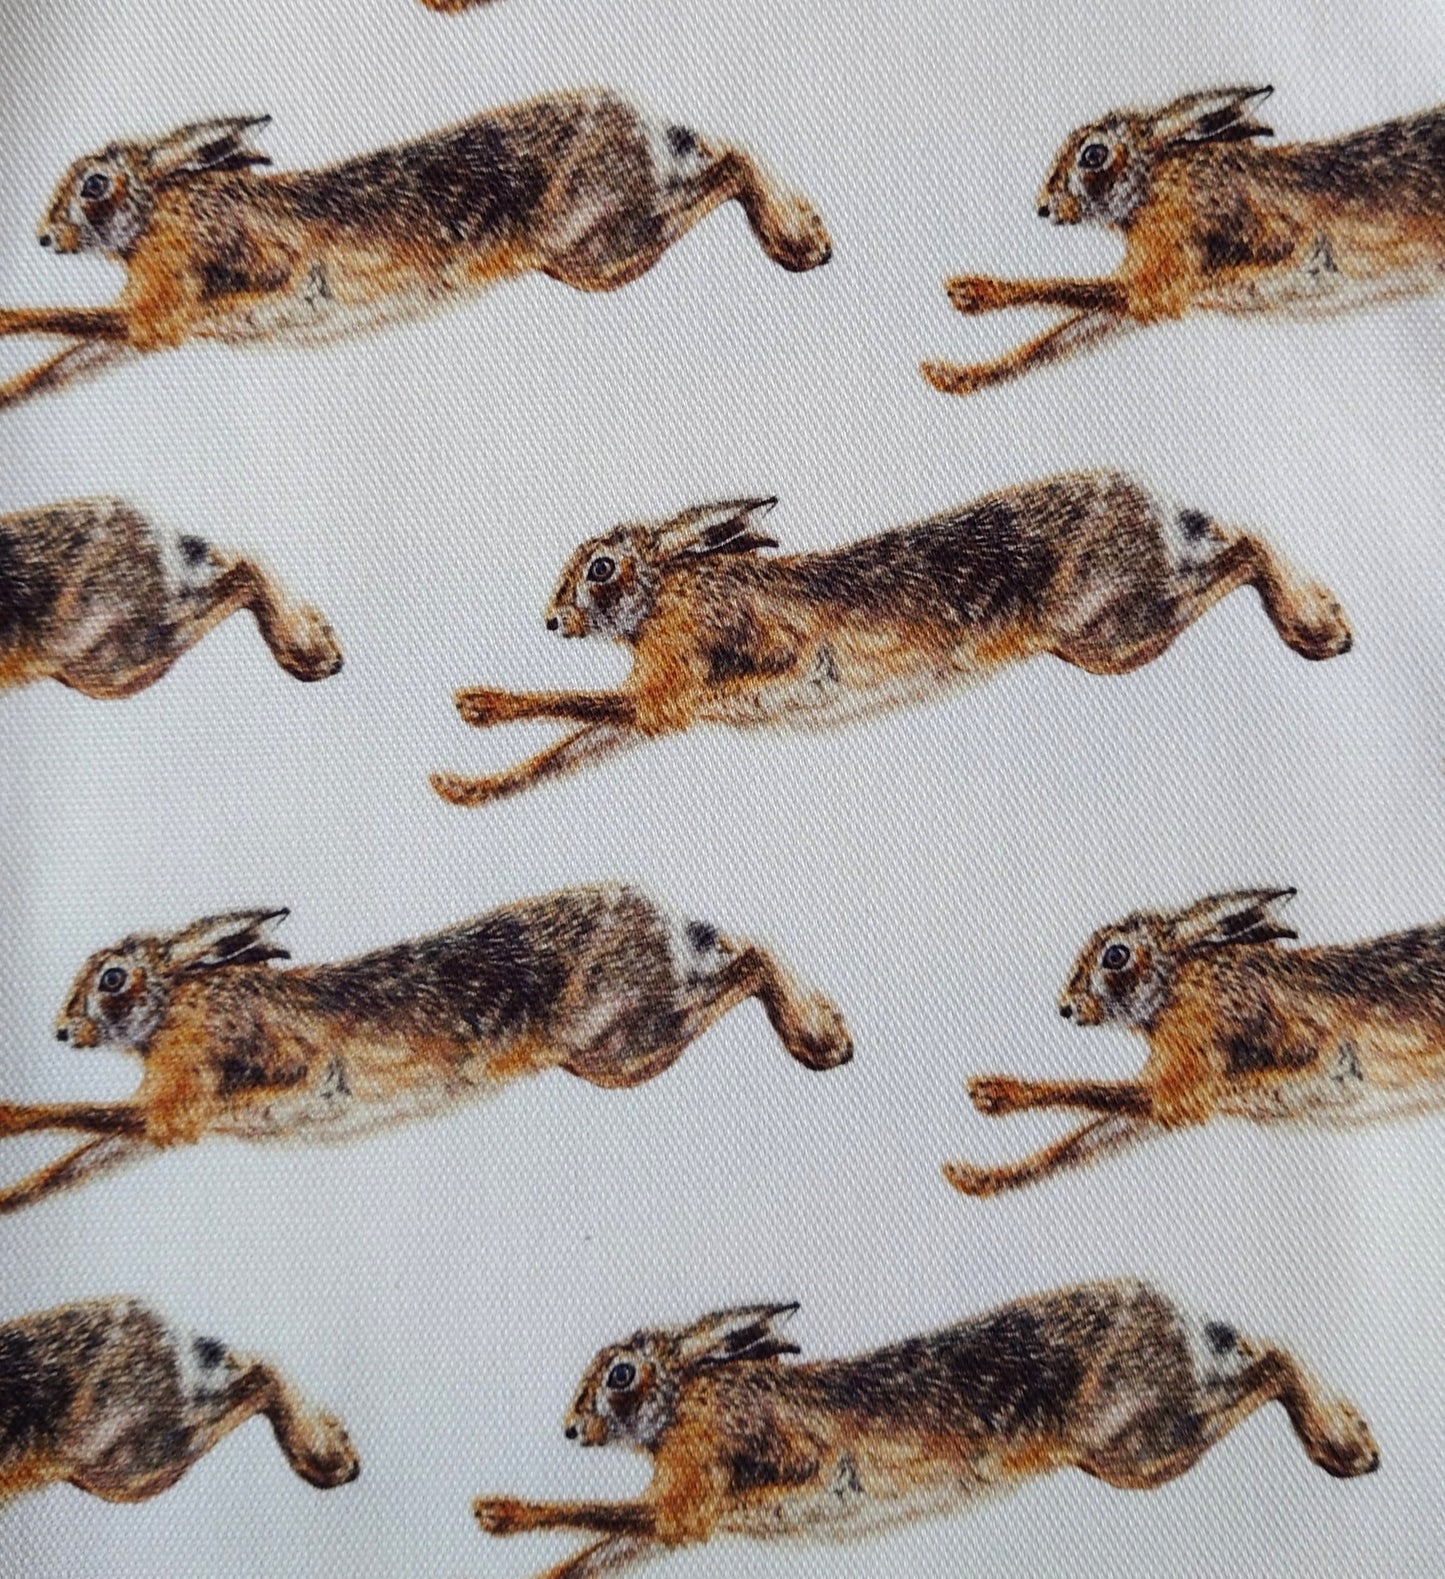 Running Hare Tea Towel